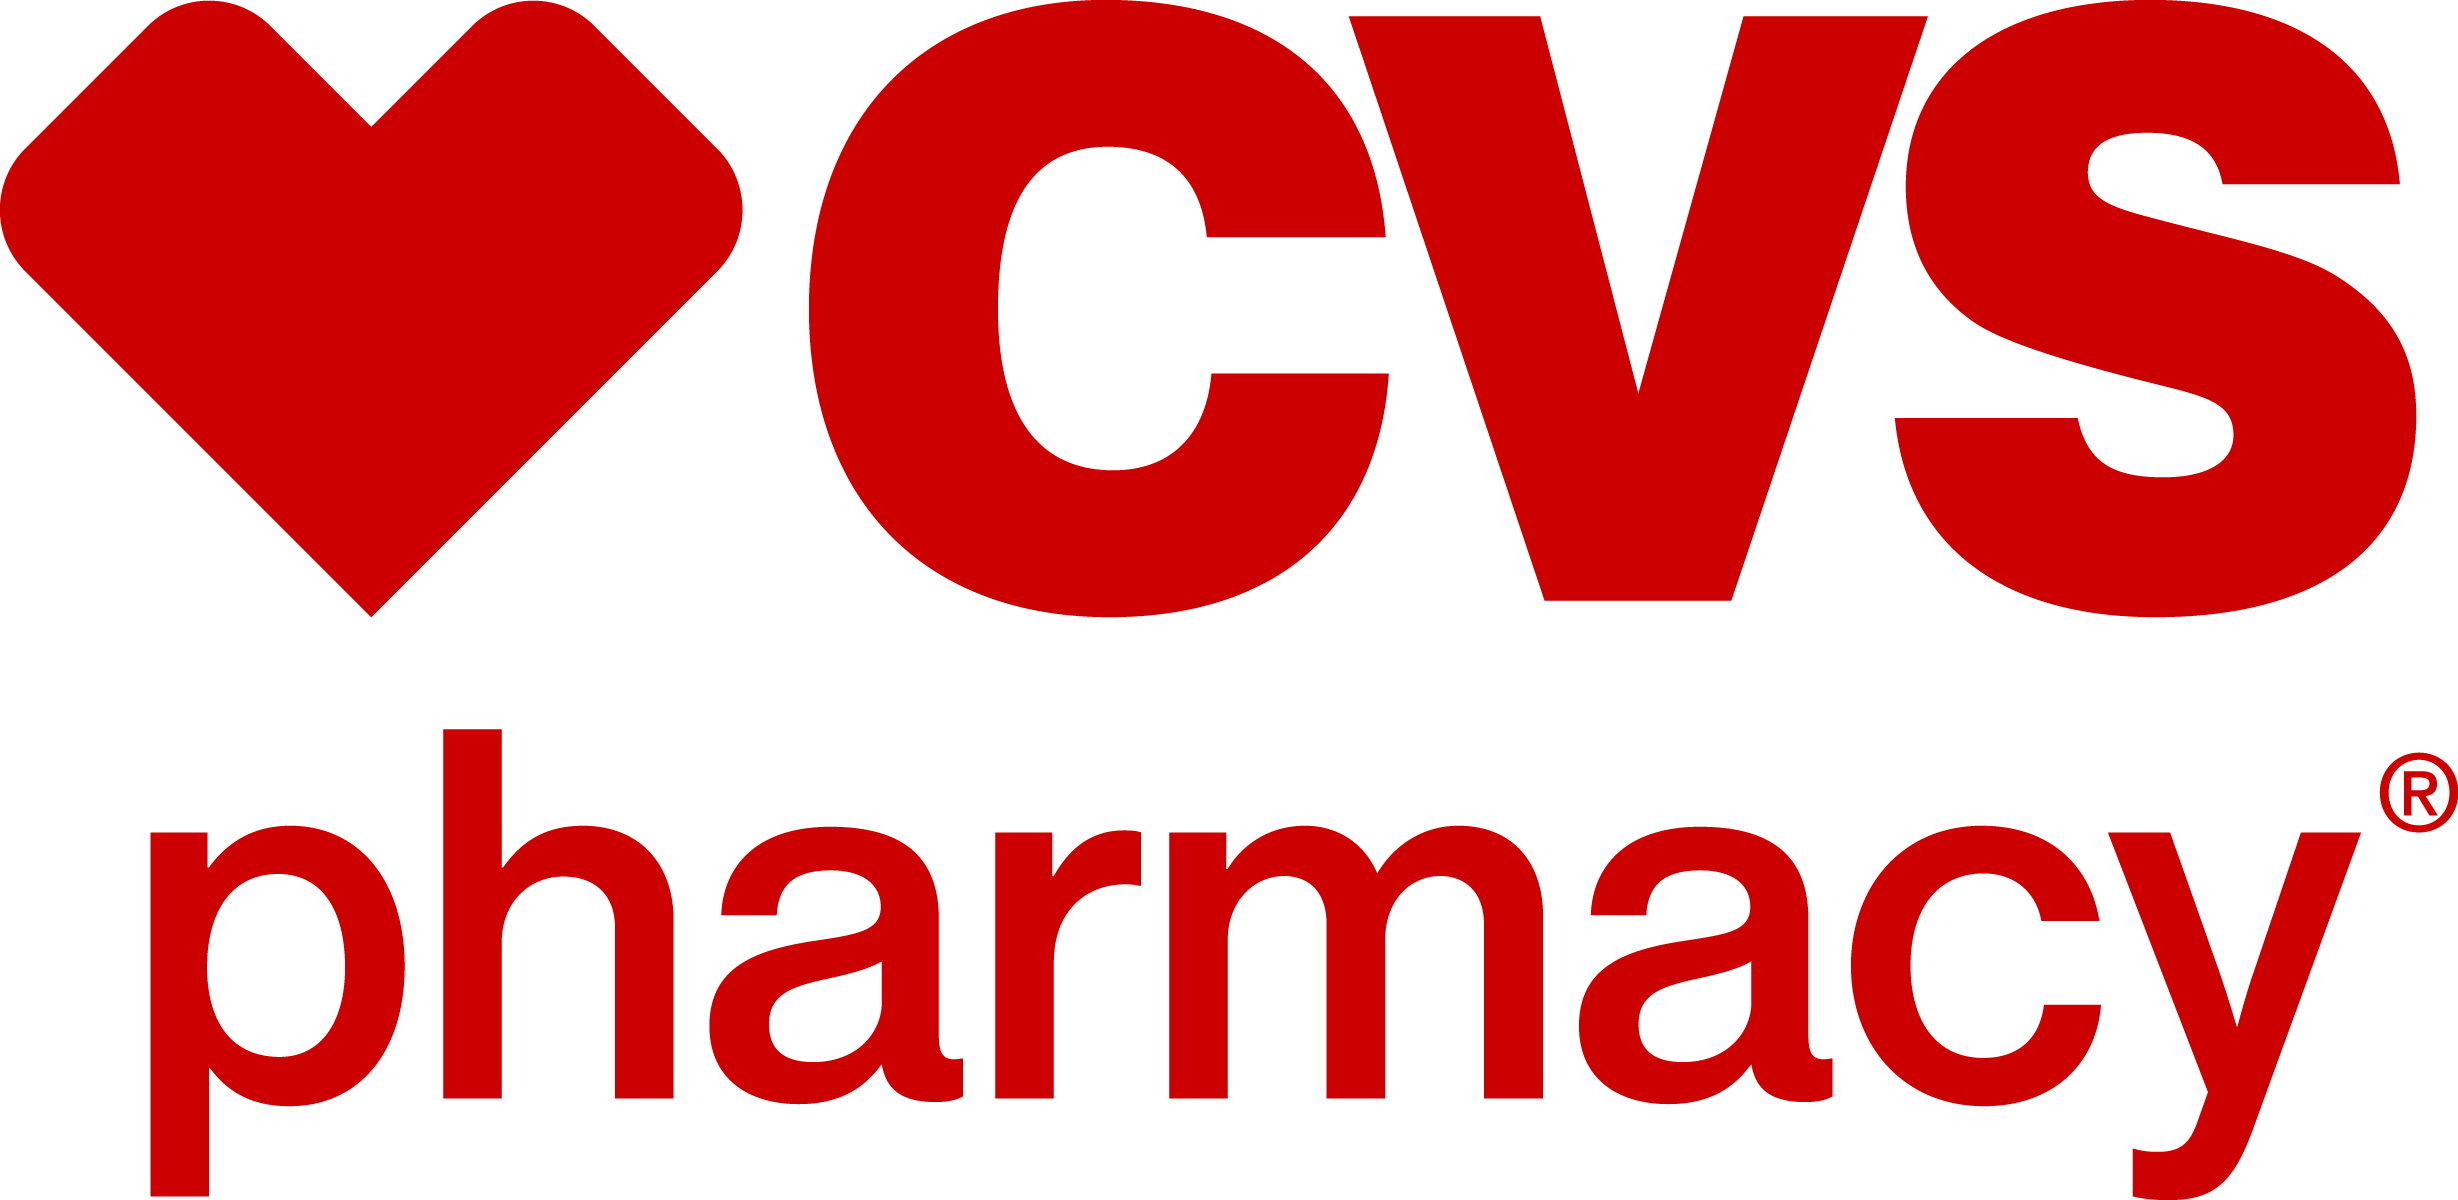 cvs-pharmacy-logo-stacked.png